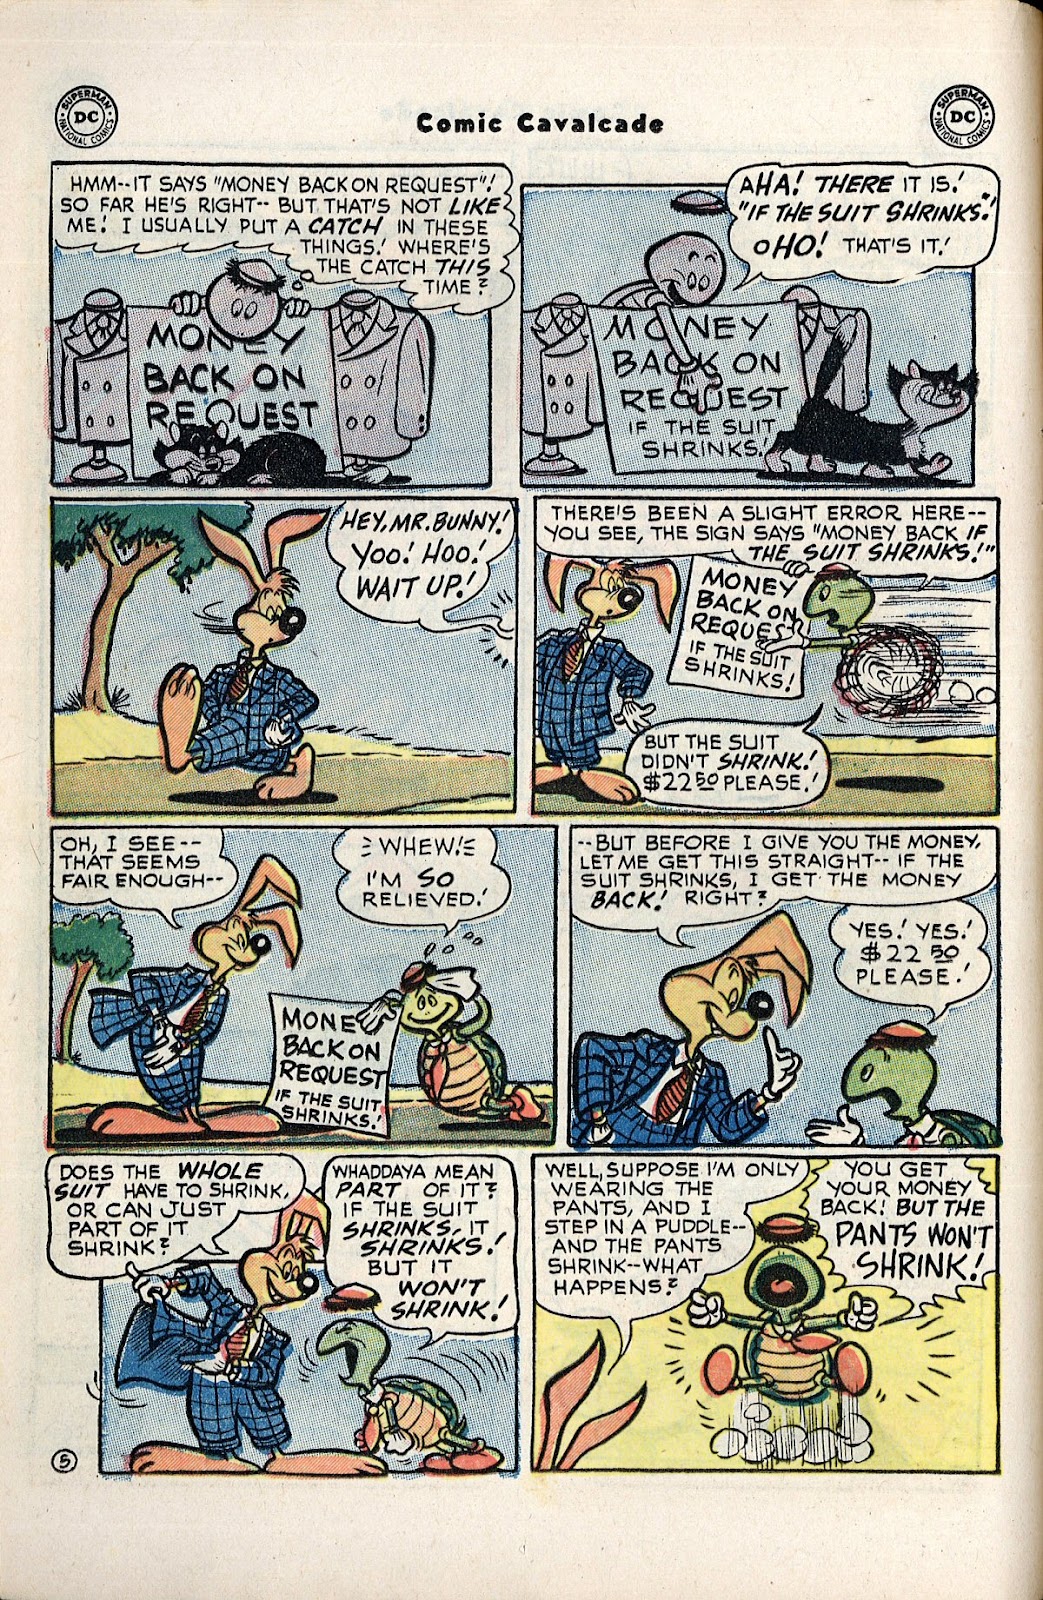 Comic Cavalcade issue 59 - Page 24